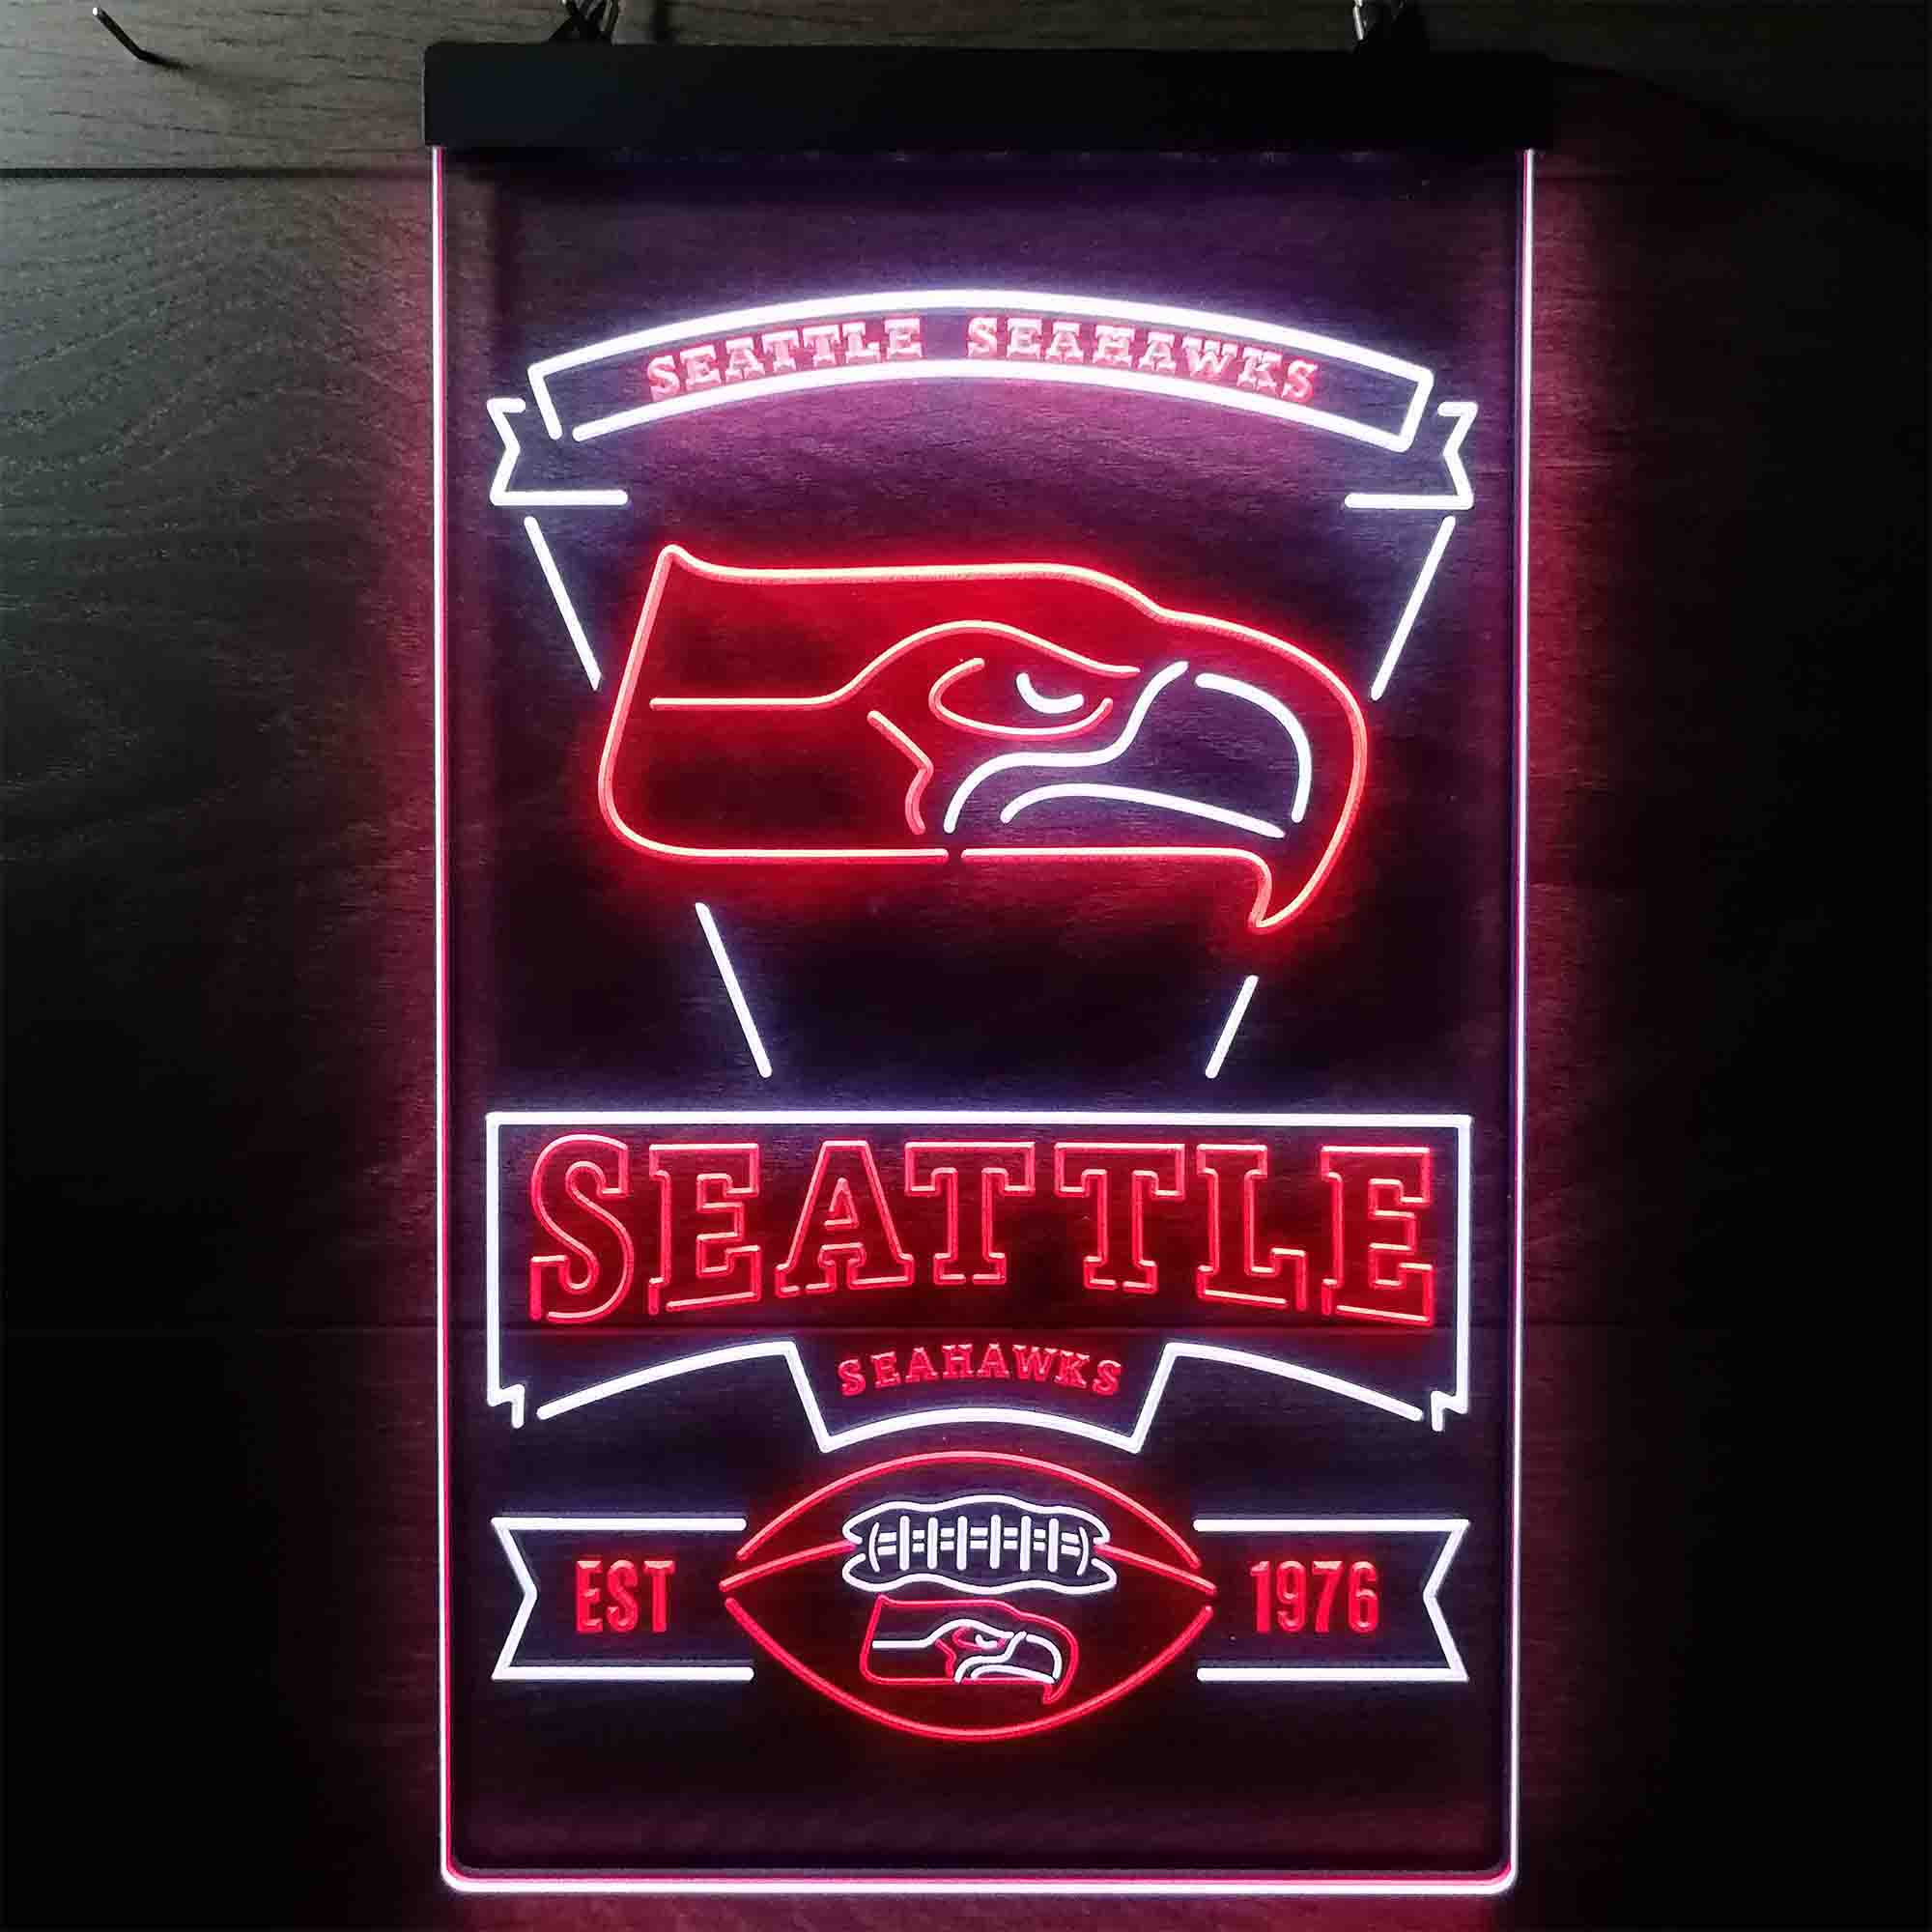 Seattle Seahawks Est. 1976 LED Neon Sign